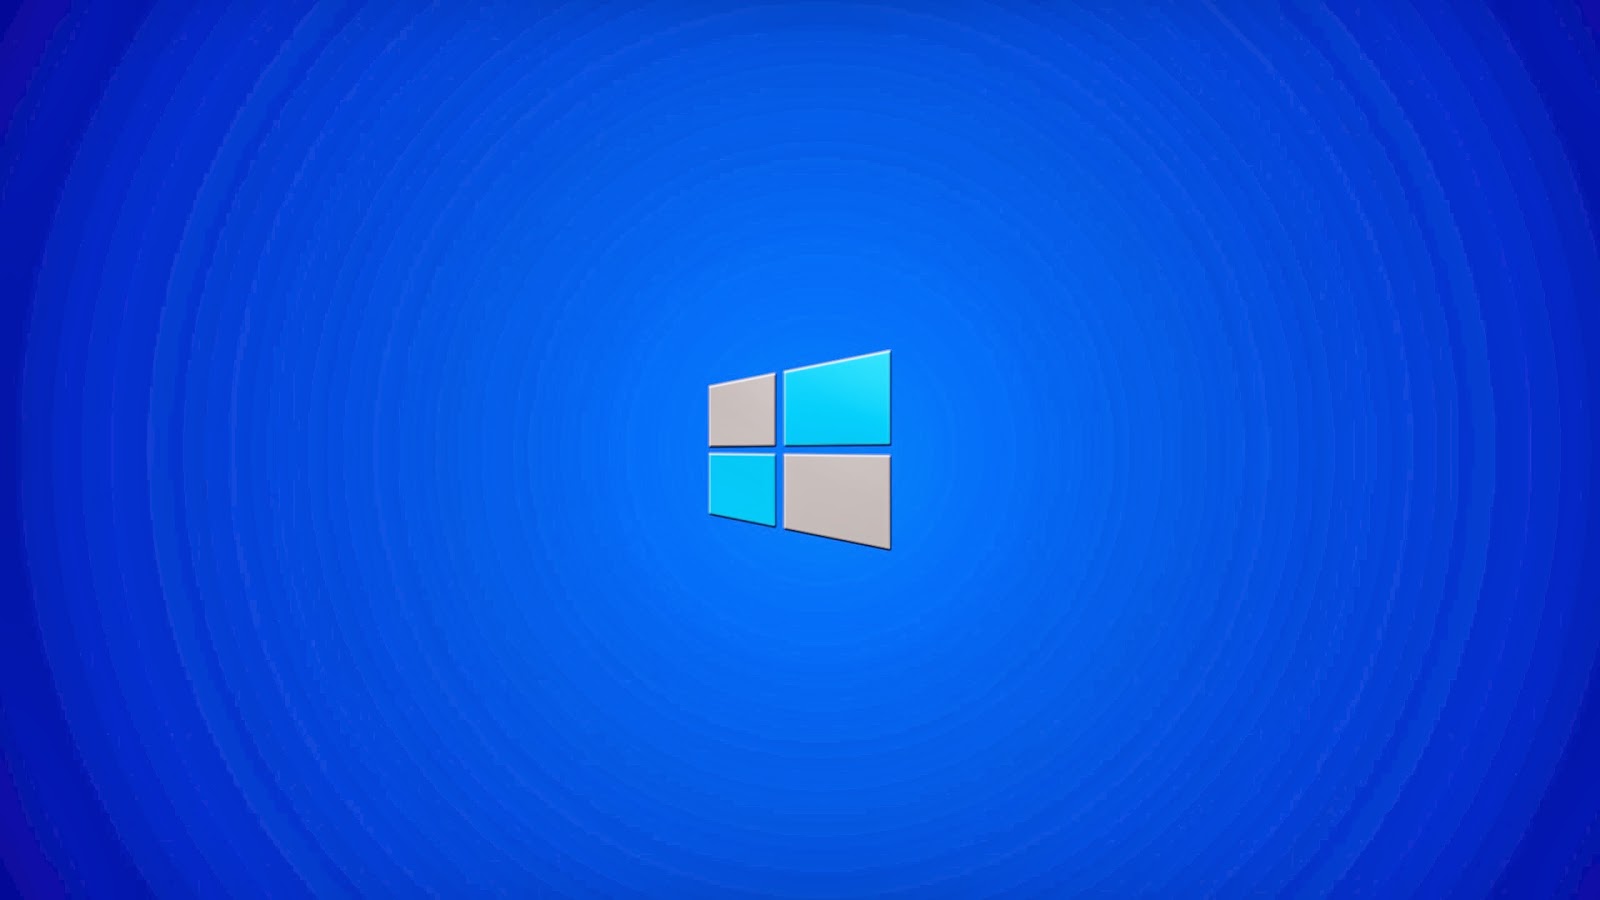 windows 10 wallpaper hd per cellulare,blu,sistema operativo,blu cobalto,blu elettrico,majorelle blu